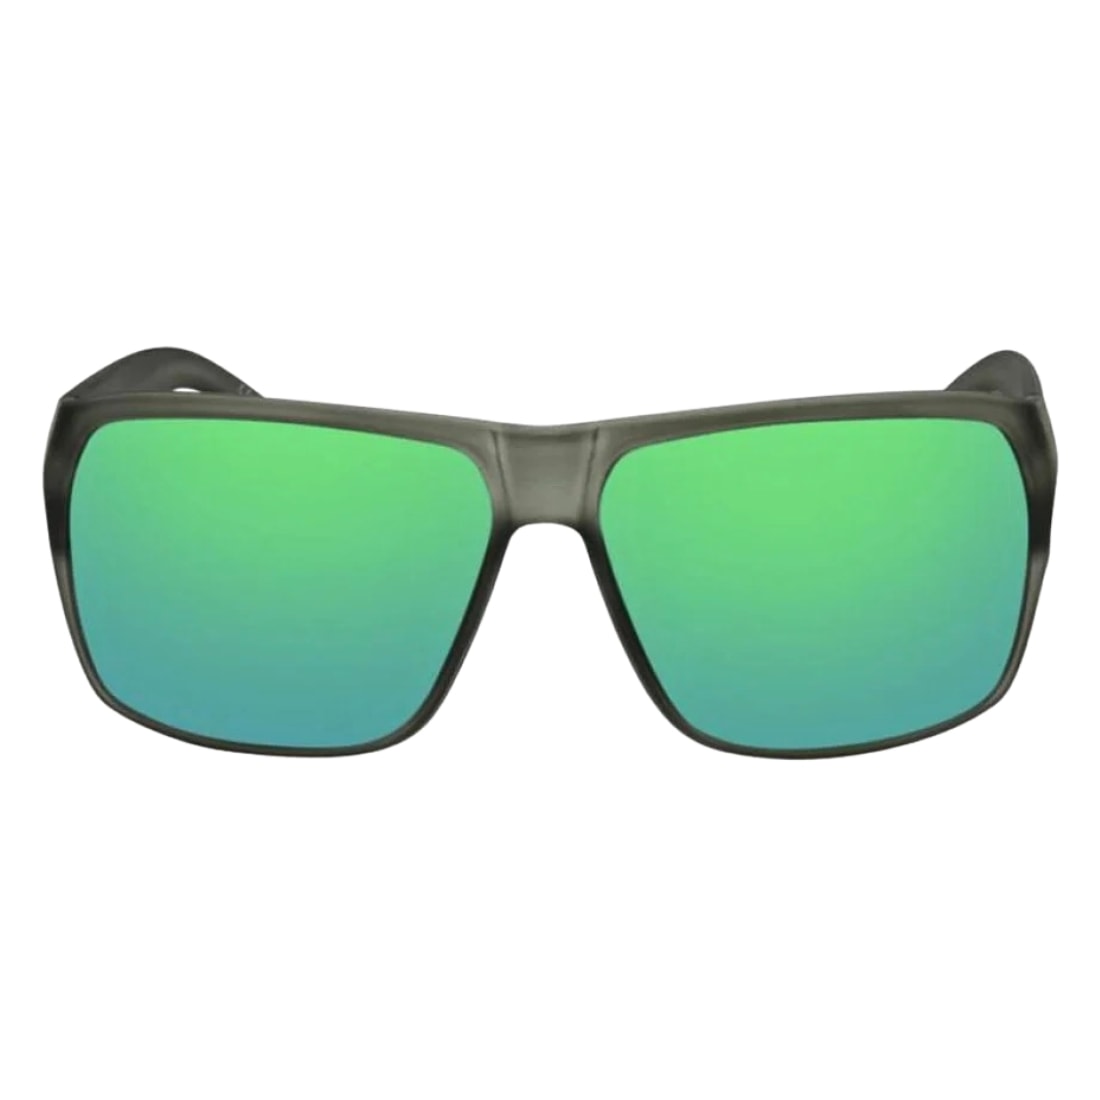 I-Sea Nick I Sunglasses - Gray/Green Polarised - Square/Rectangular Sunglasses by I-Sea